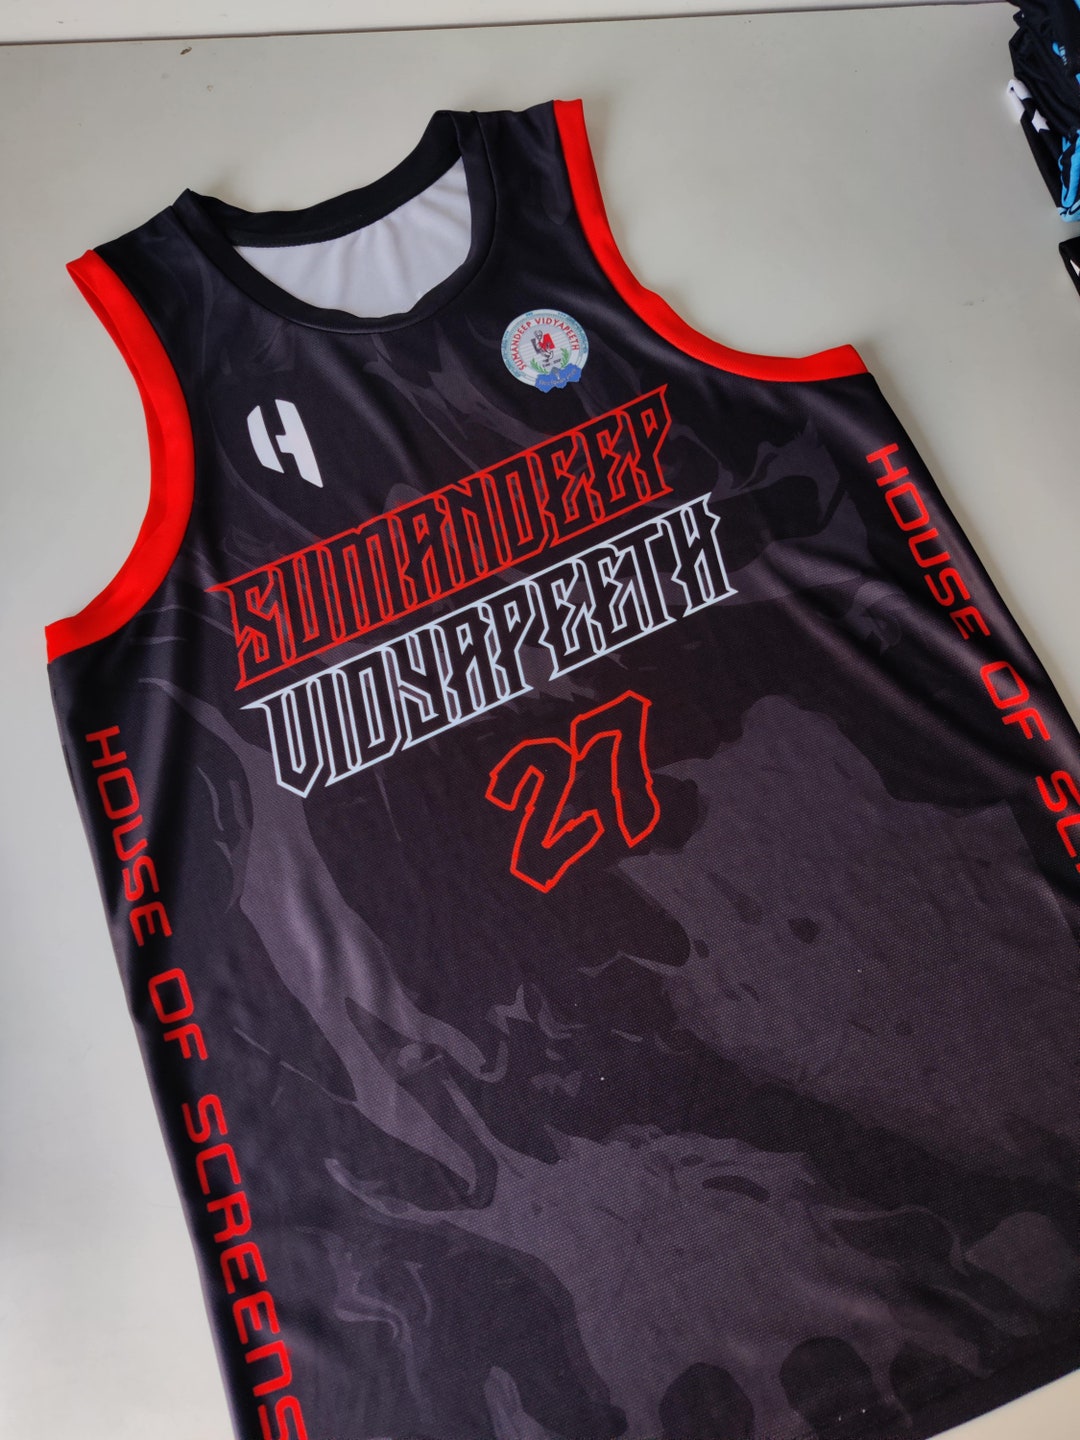 Custom reverse basketball uniform made in China, sublimation print